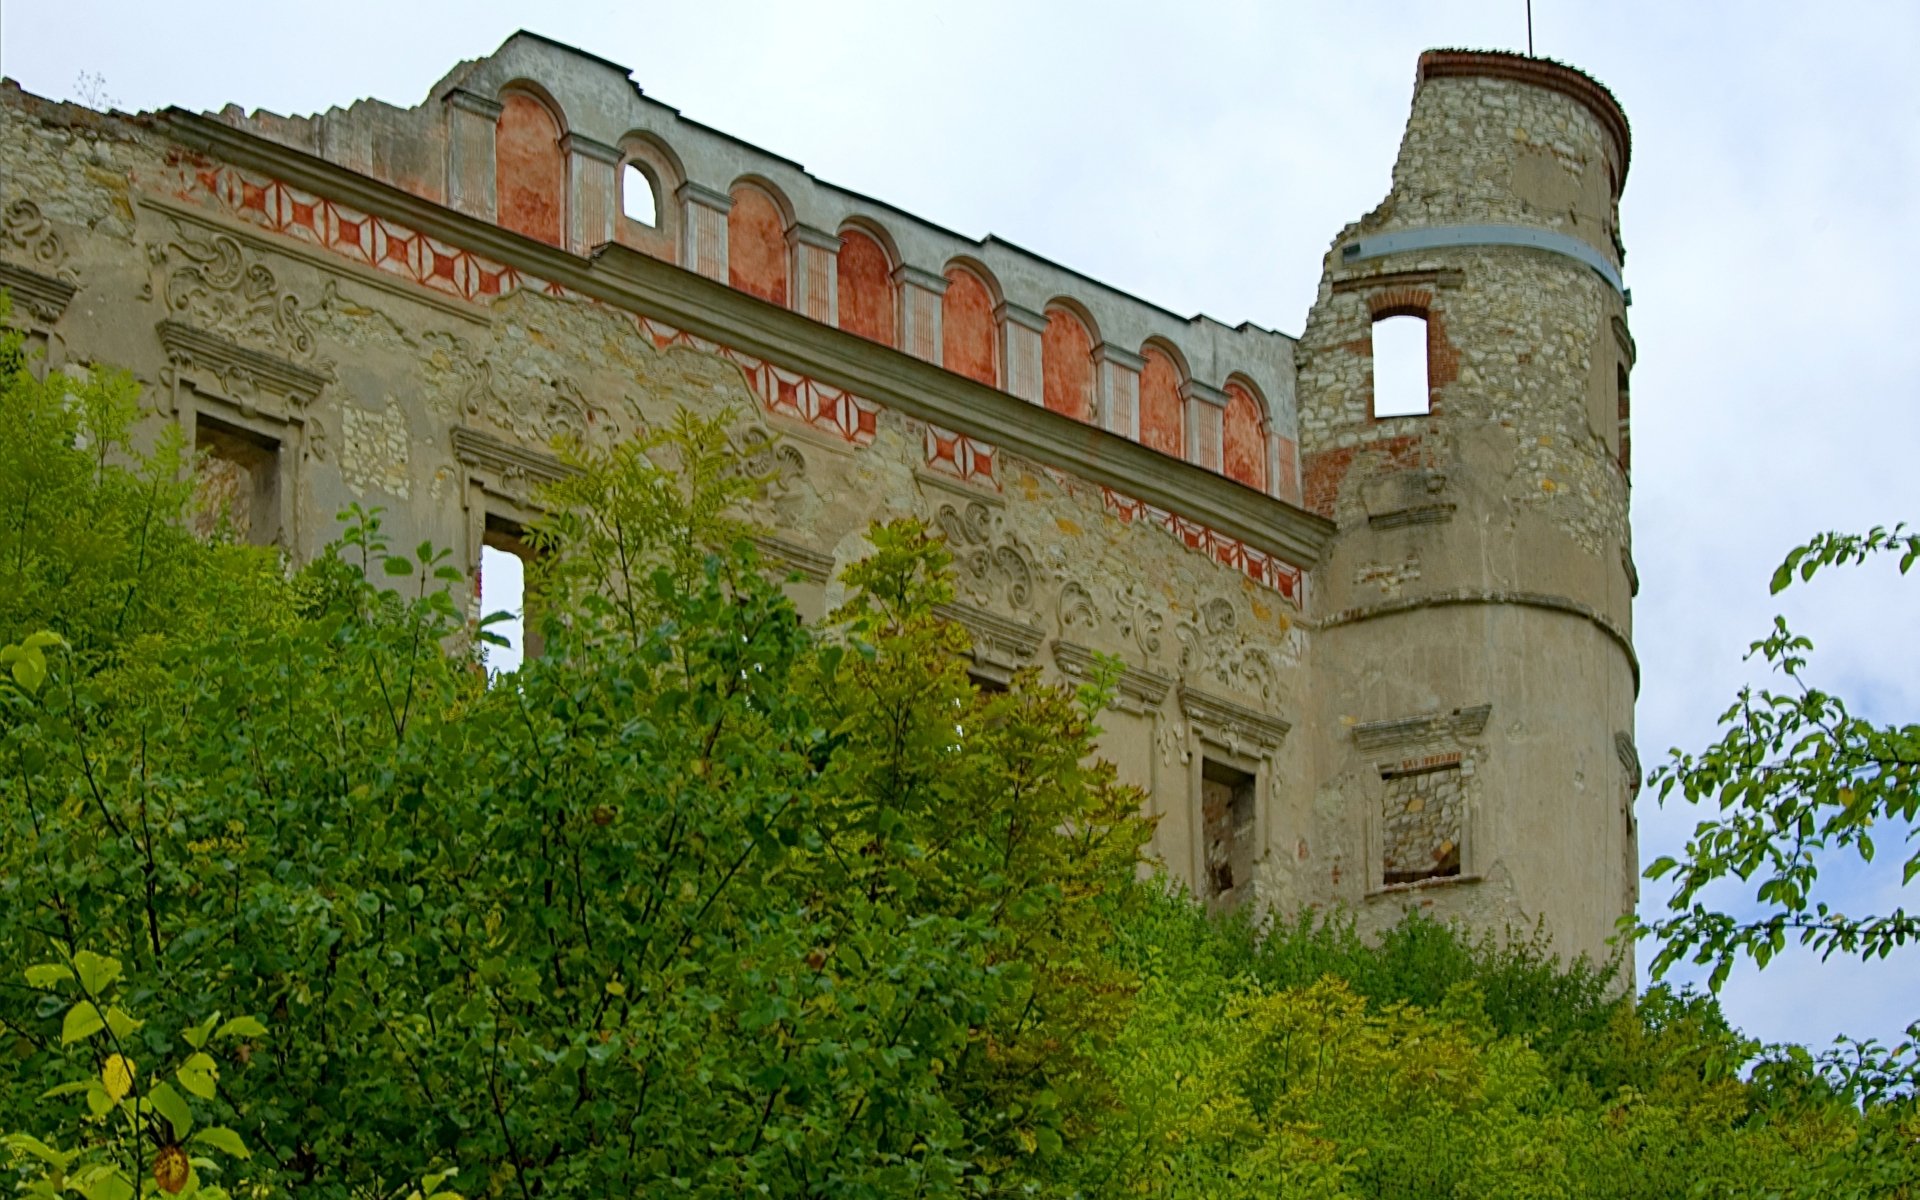 Janowiec Castle Wallpapers